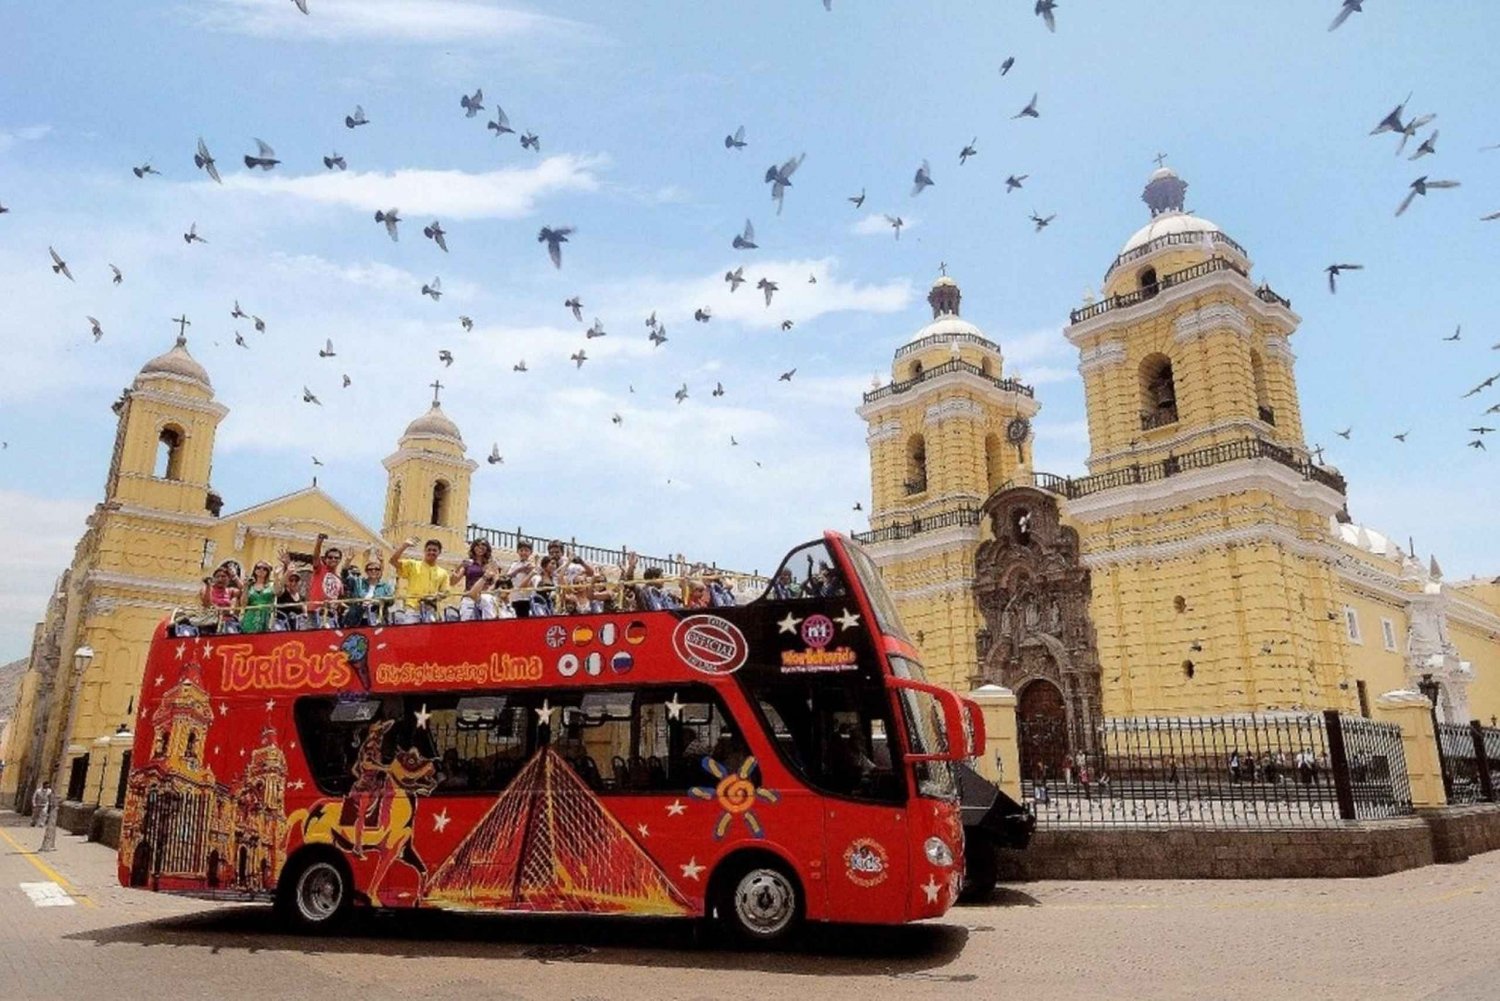 Lima: Panoramische bus-, wandeltour en Catacomben Tour